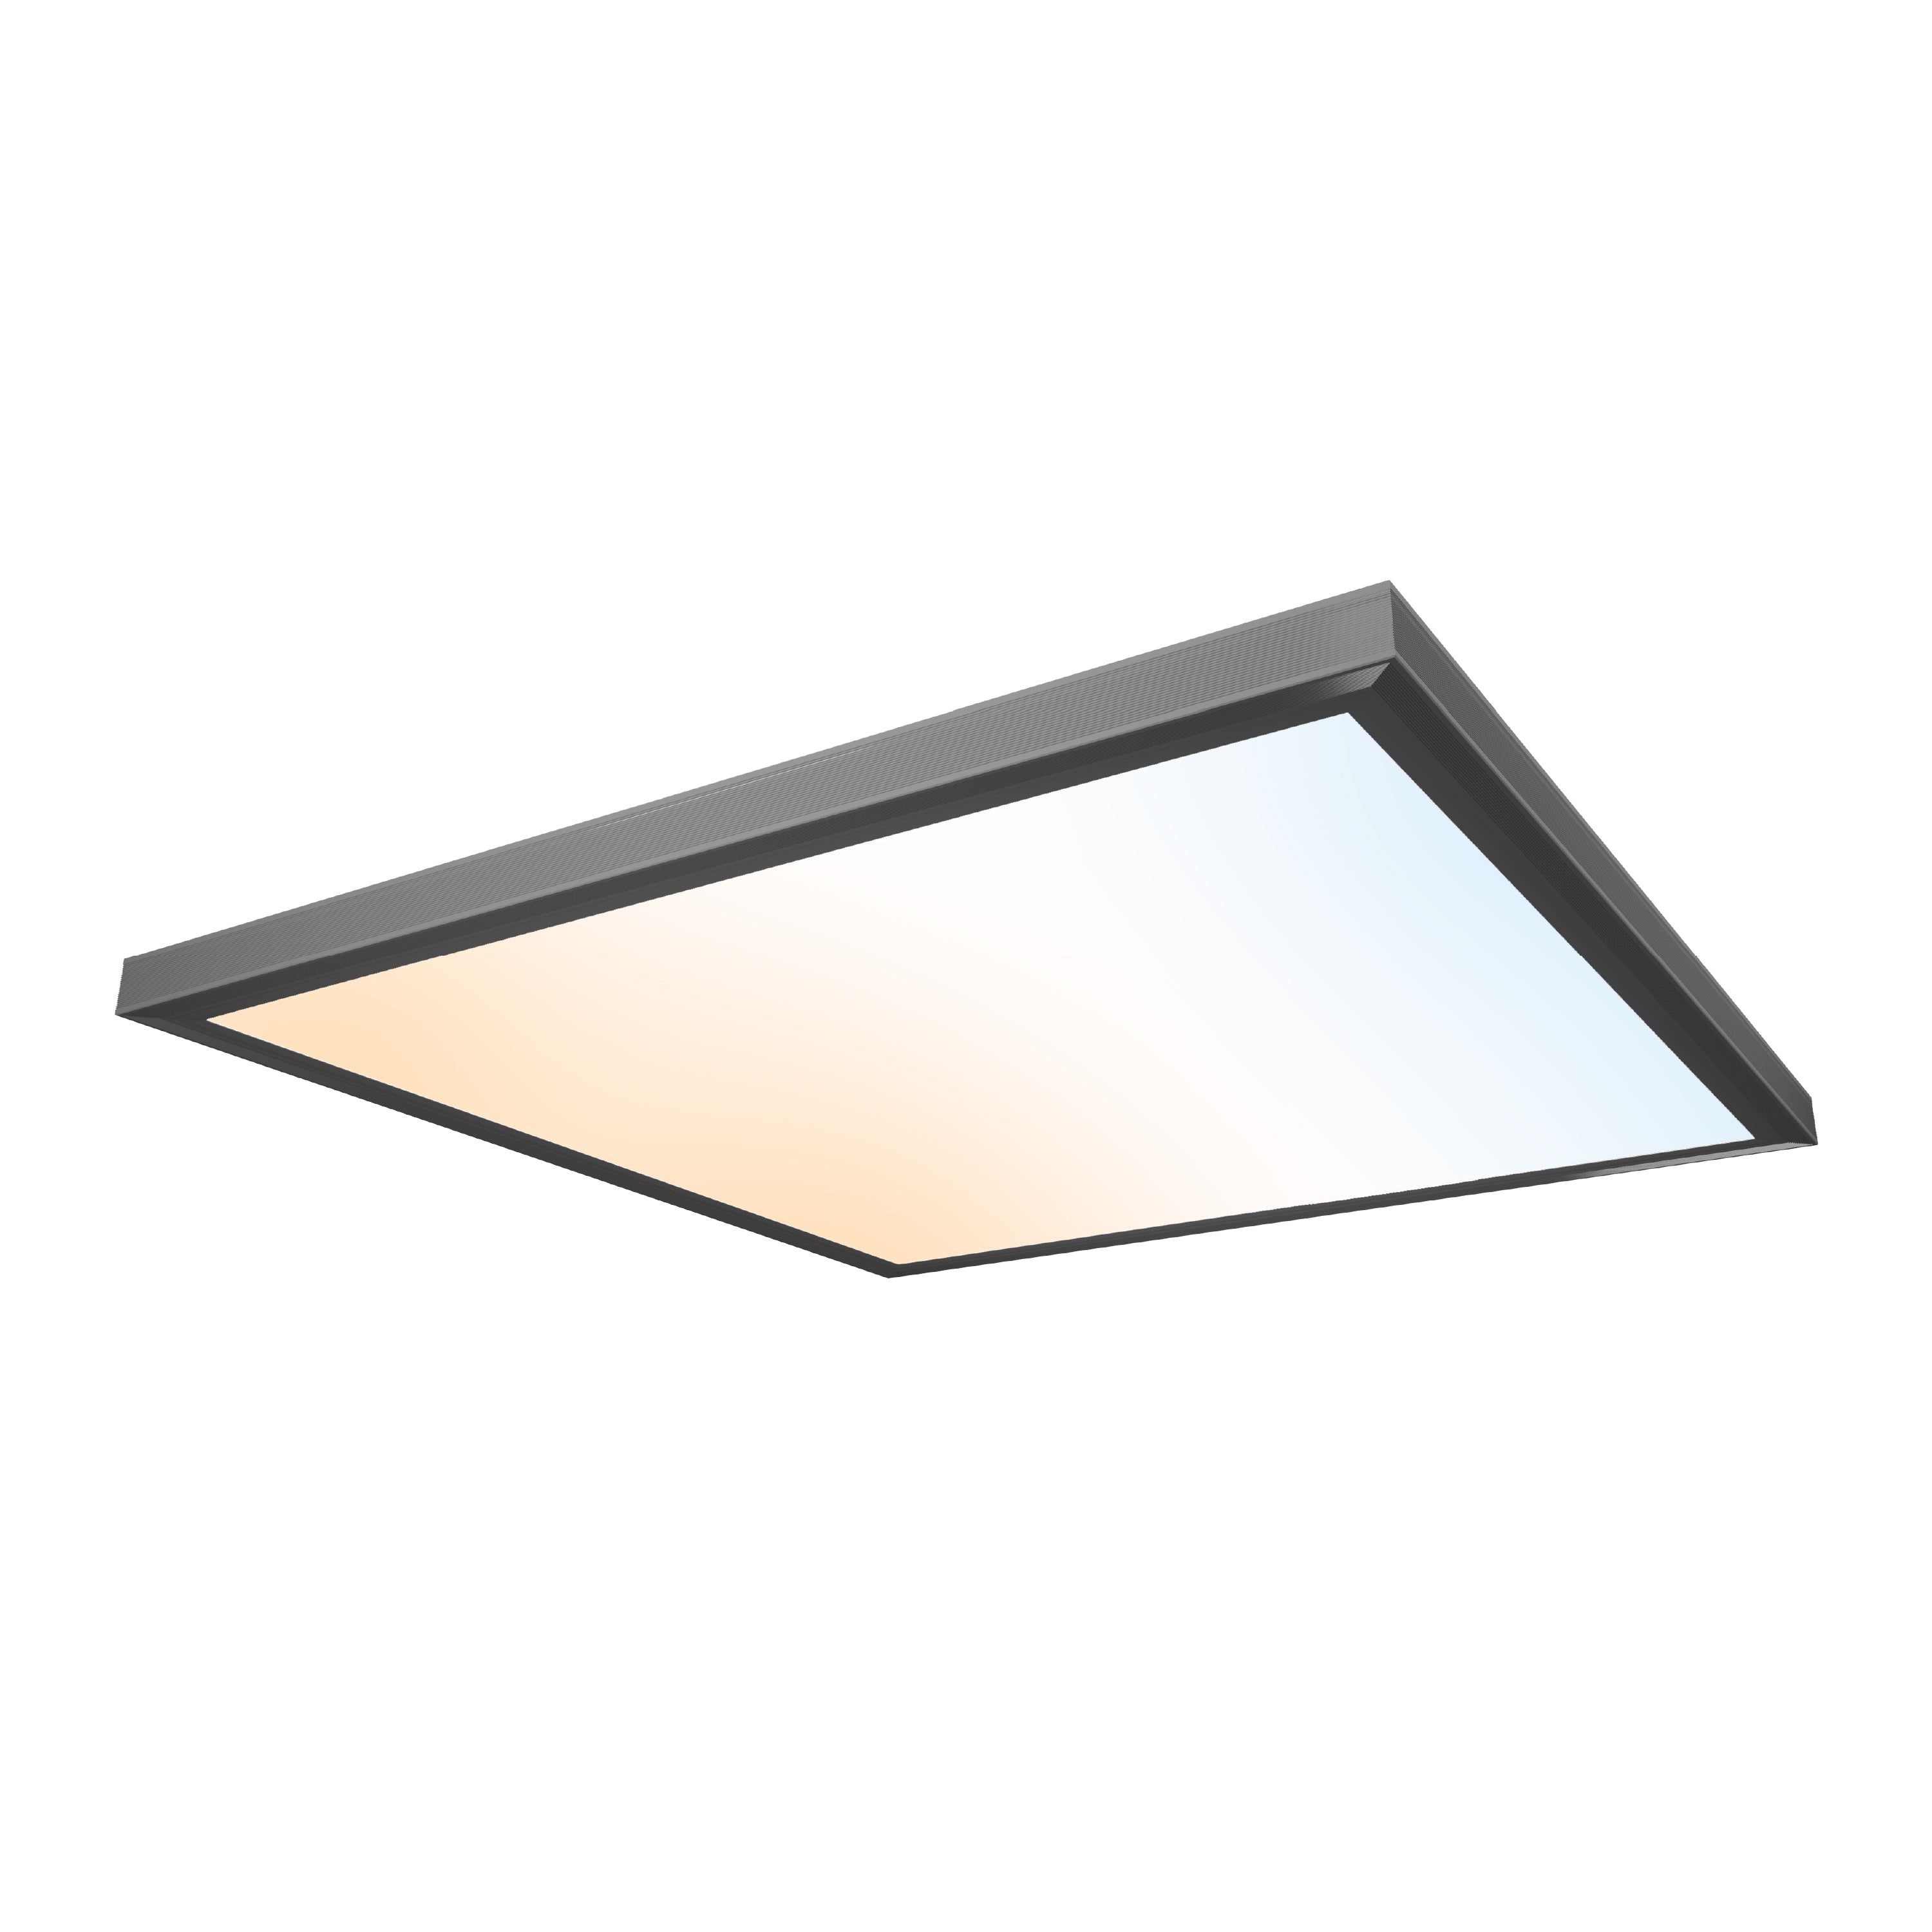 FluxPanel Selectable LED (SBP) - General purpose lensed